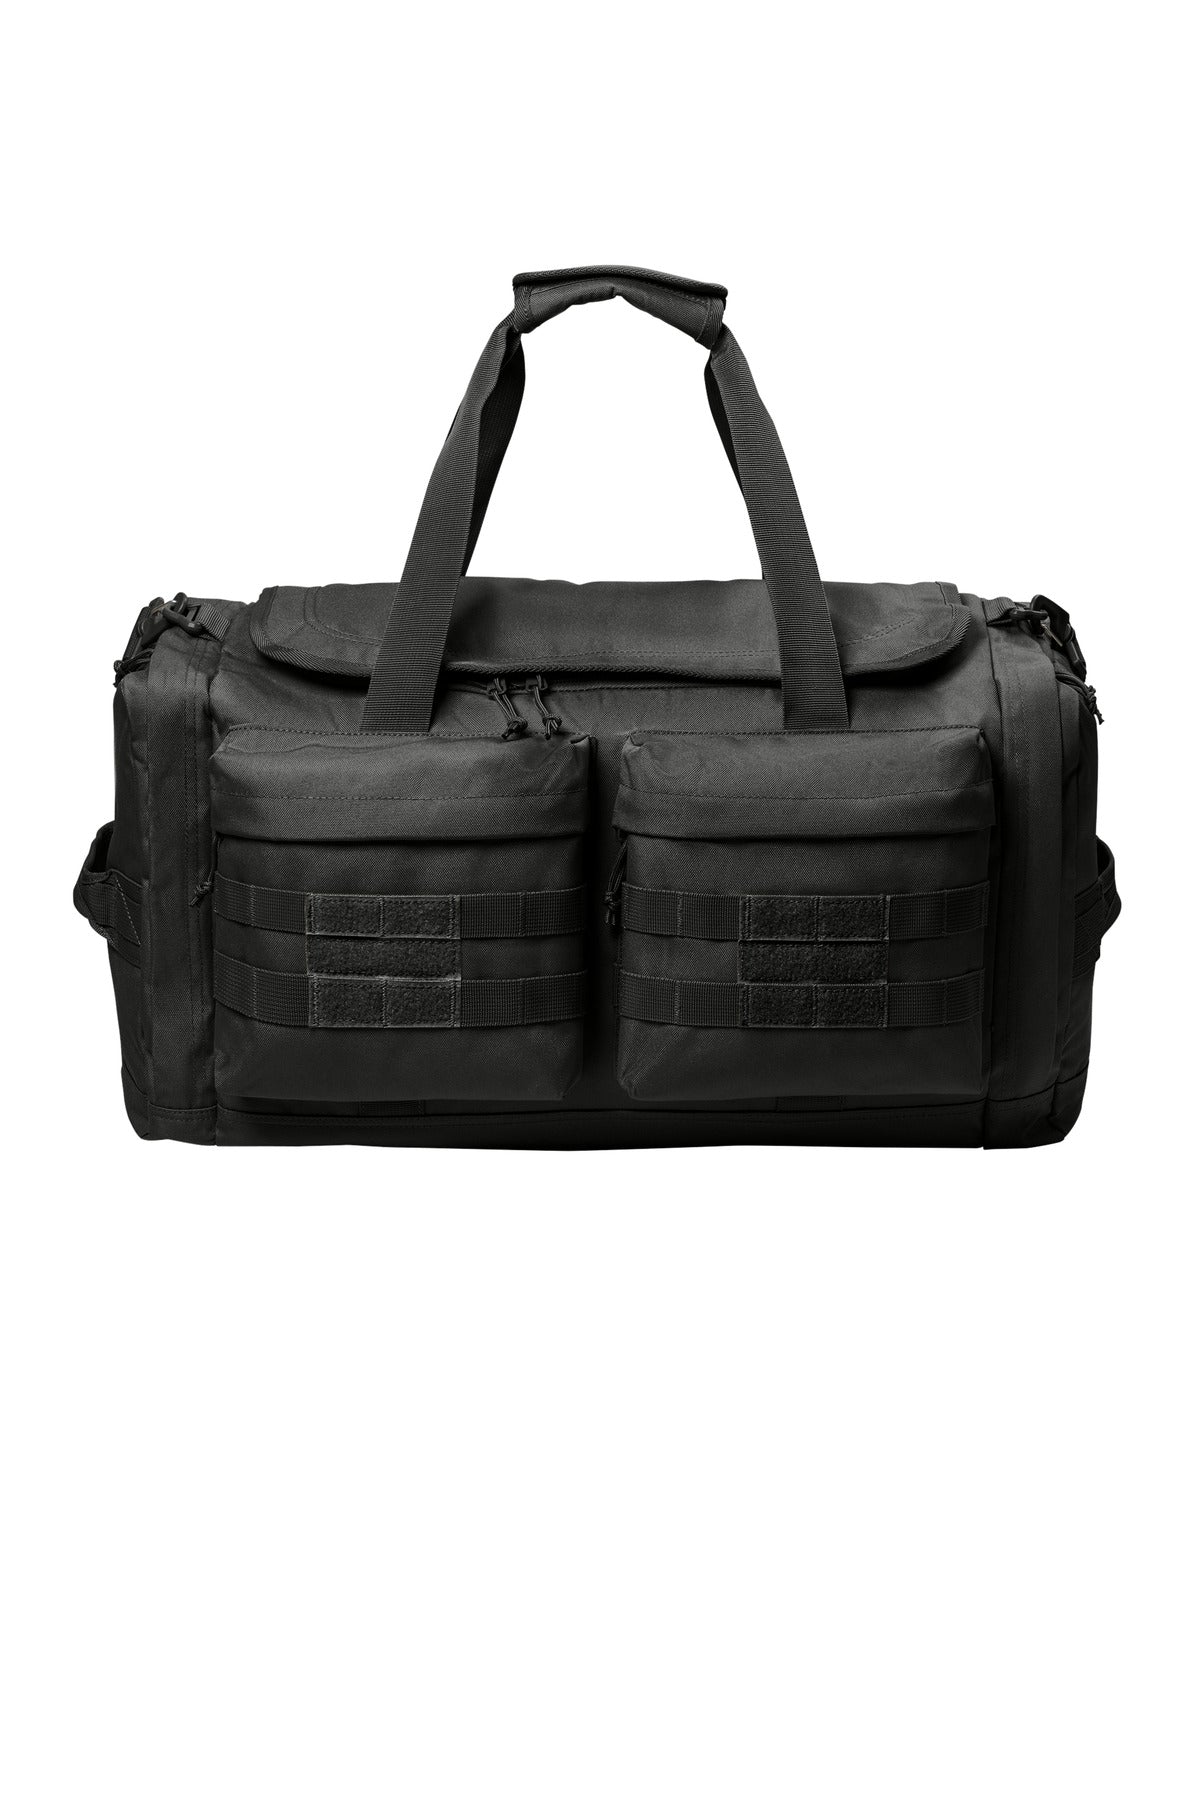 Photo of CornerStone Bags CSB815  color  Black